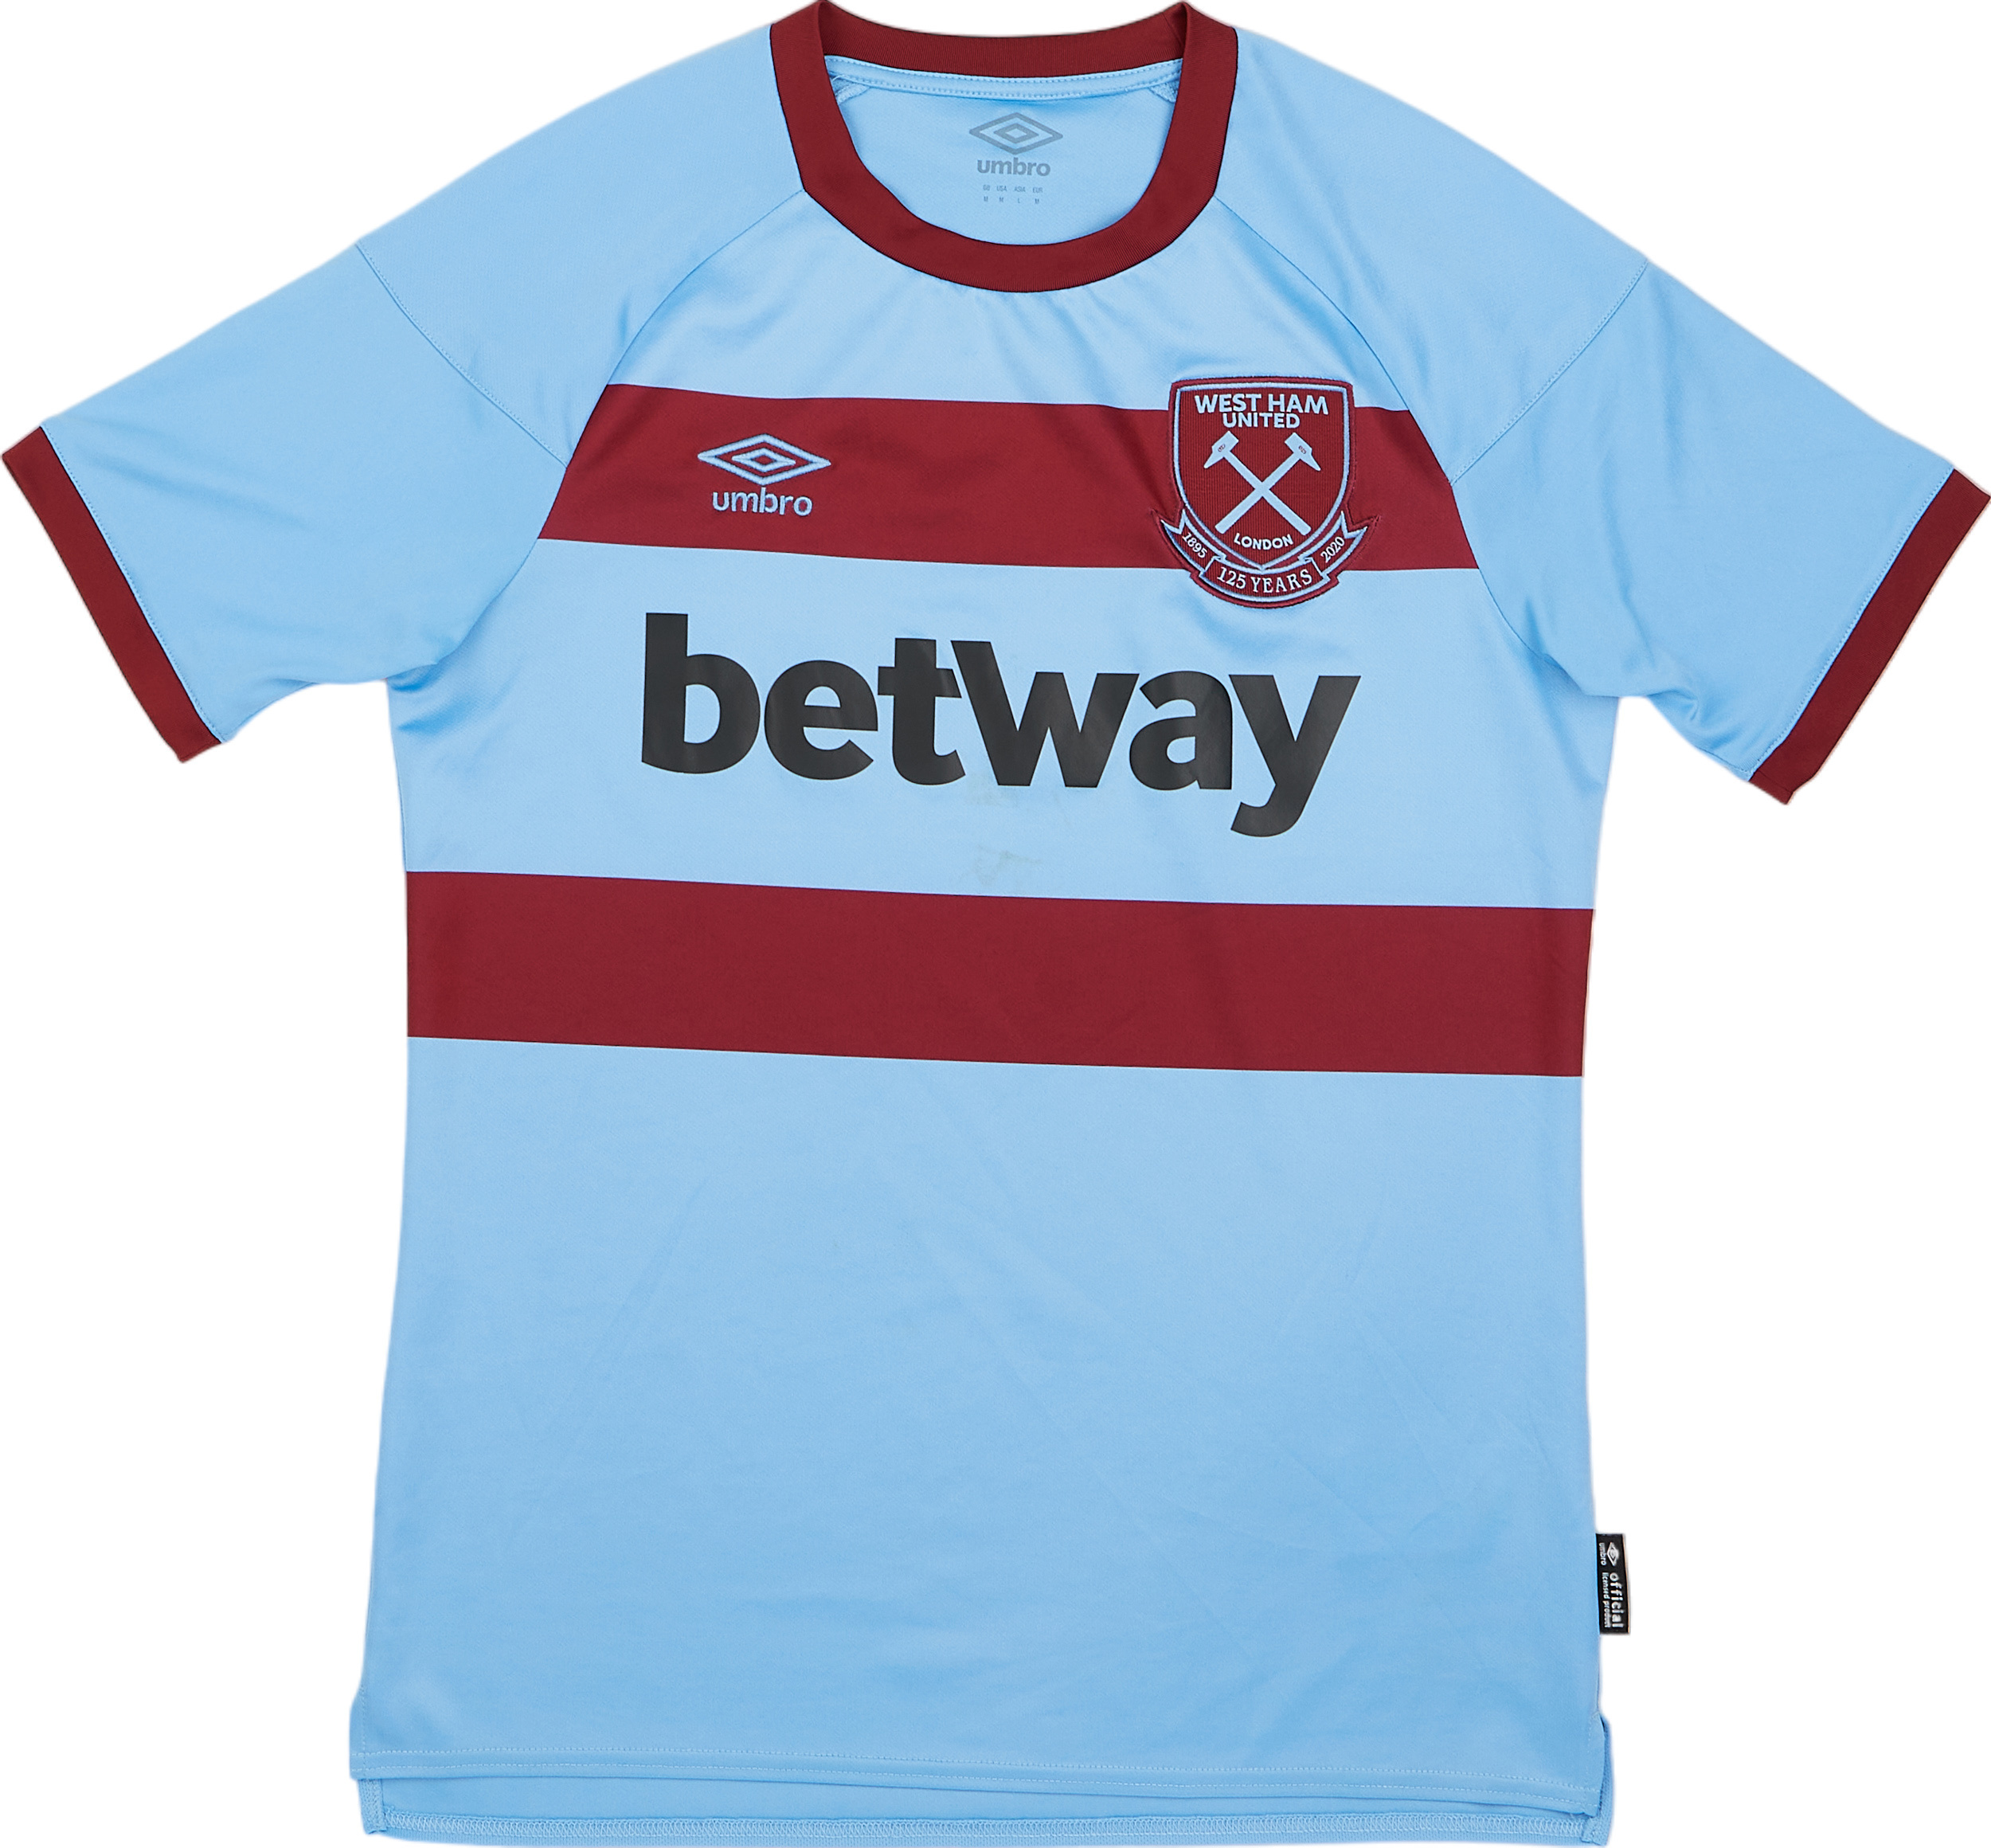 2020-21 West Ham United Away Shirt - 8/10 - ()